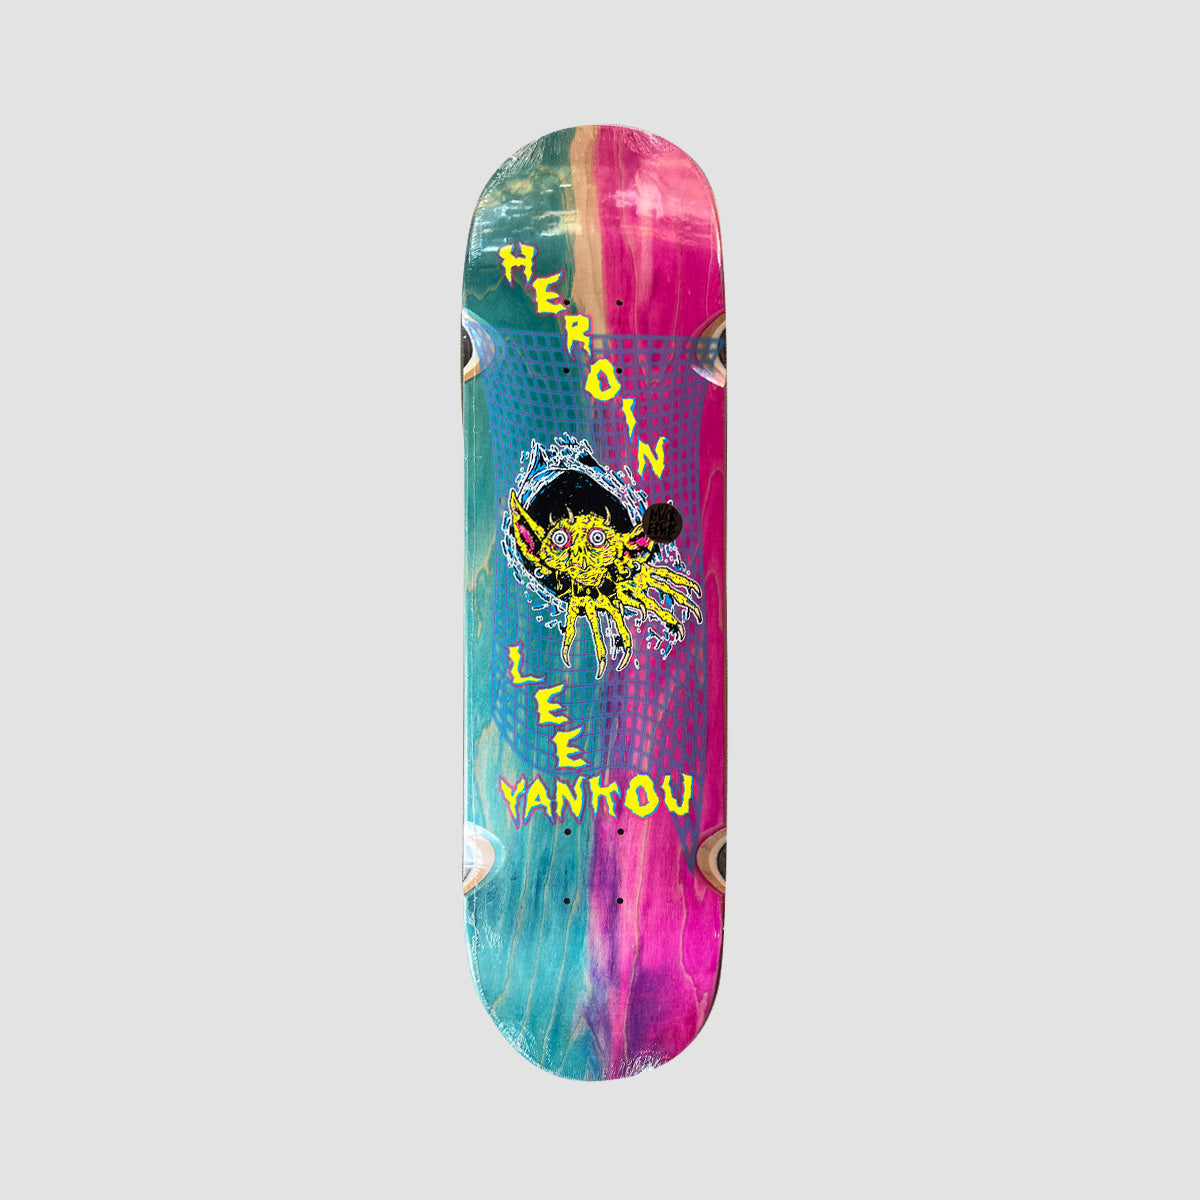 Heroin Lee Yankou Imp Invader Razor Edge Skateboard Deck Various Stains - 8.25 Inches